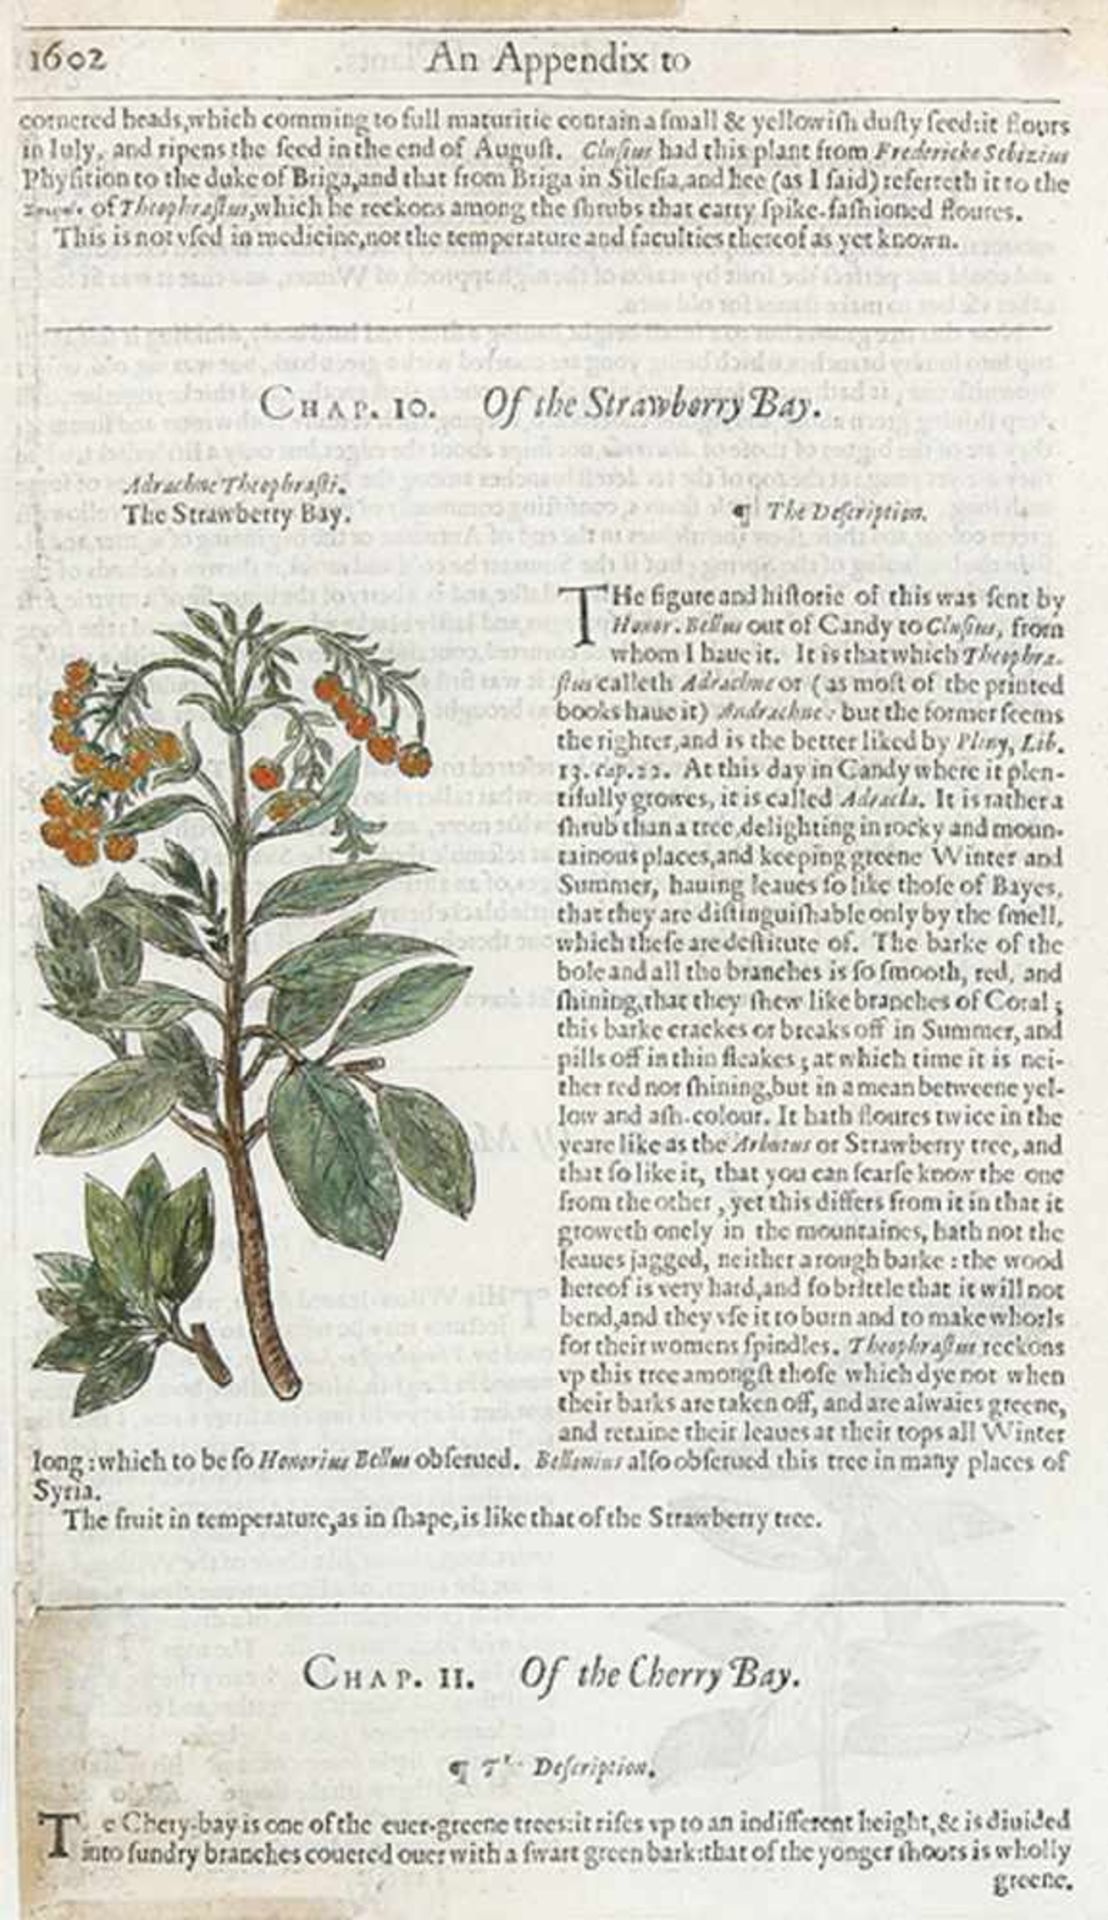 BLUMEN - PFLANZENMalus Cotonea - Cypresseus satina - Adrachne Theophrasti - Sparganium ramosum.